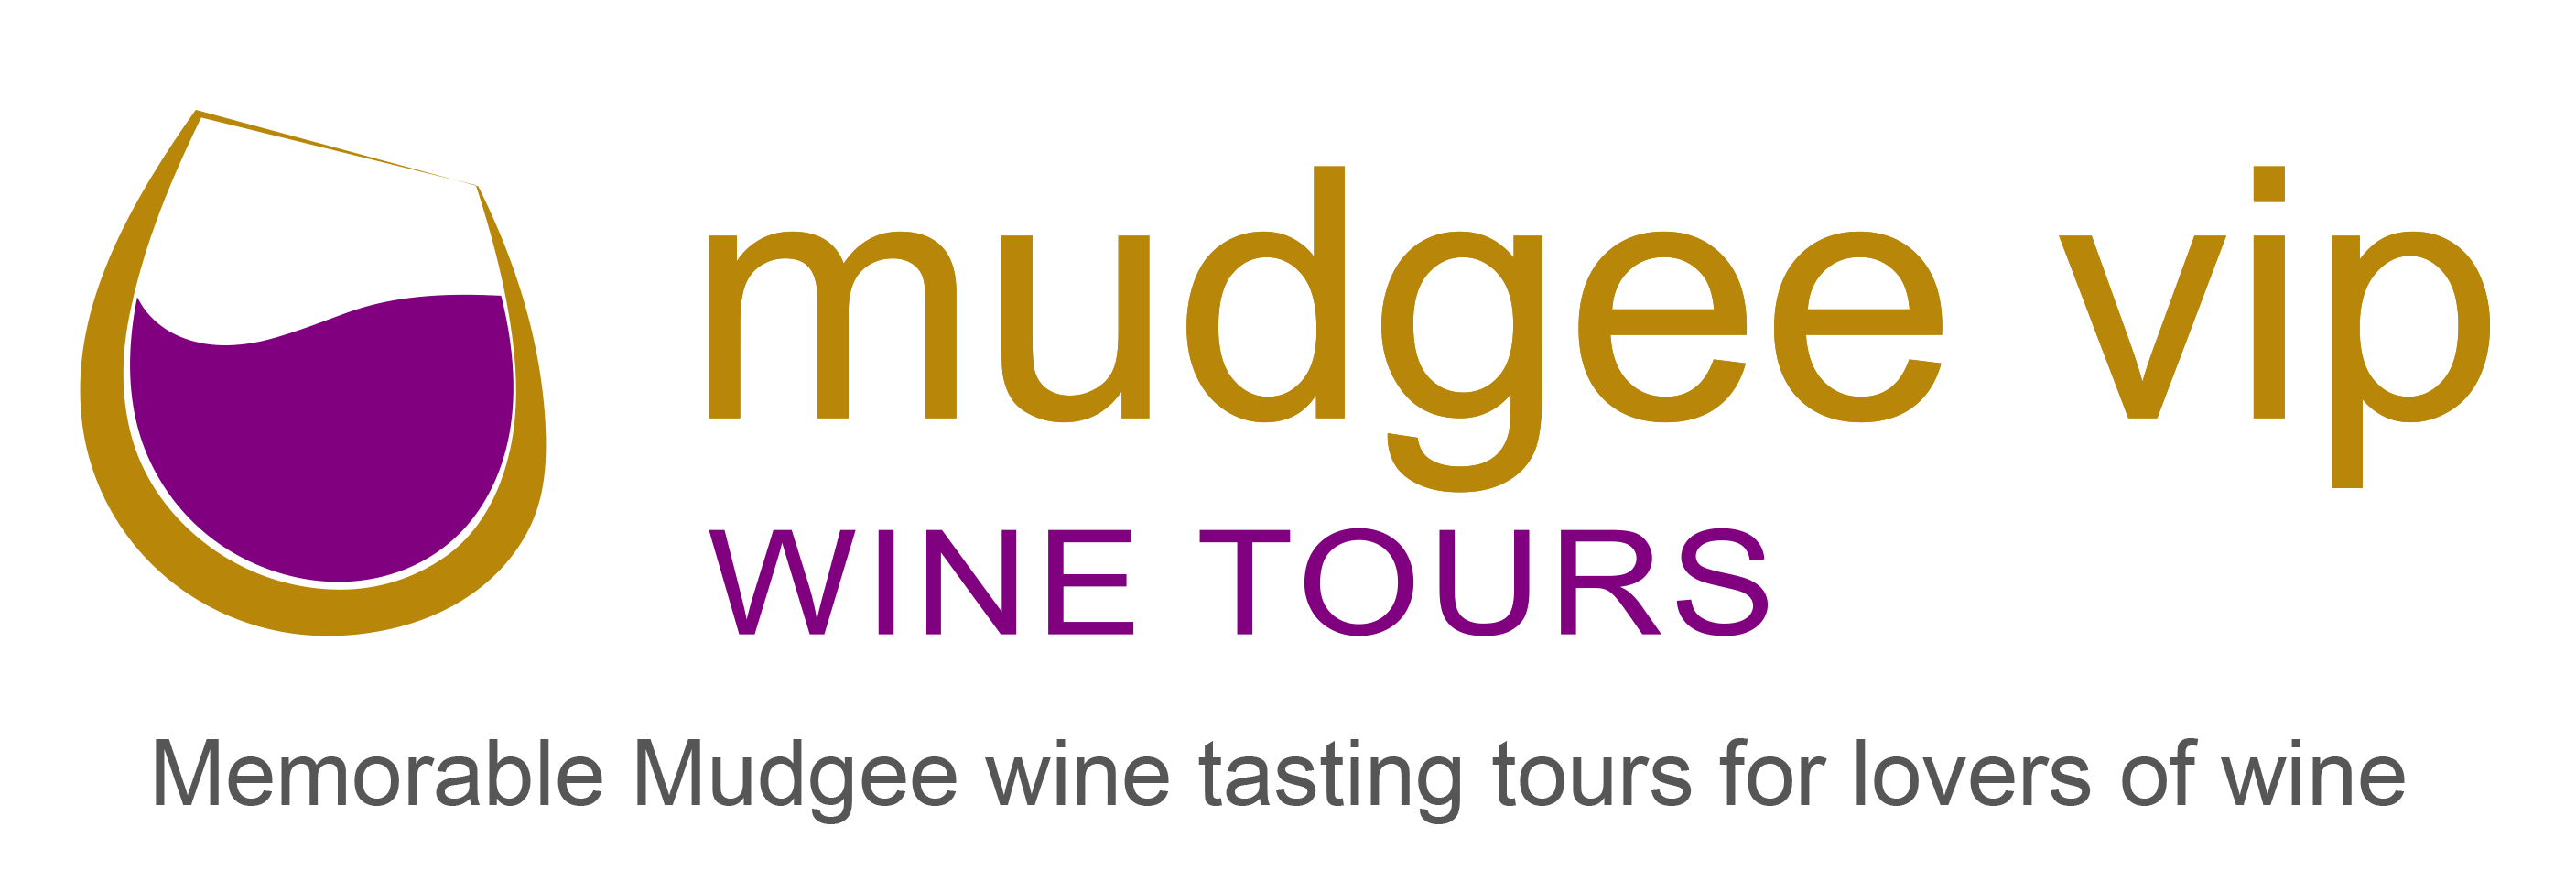 Mudgee VIP Wine Tours